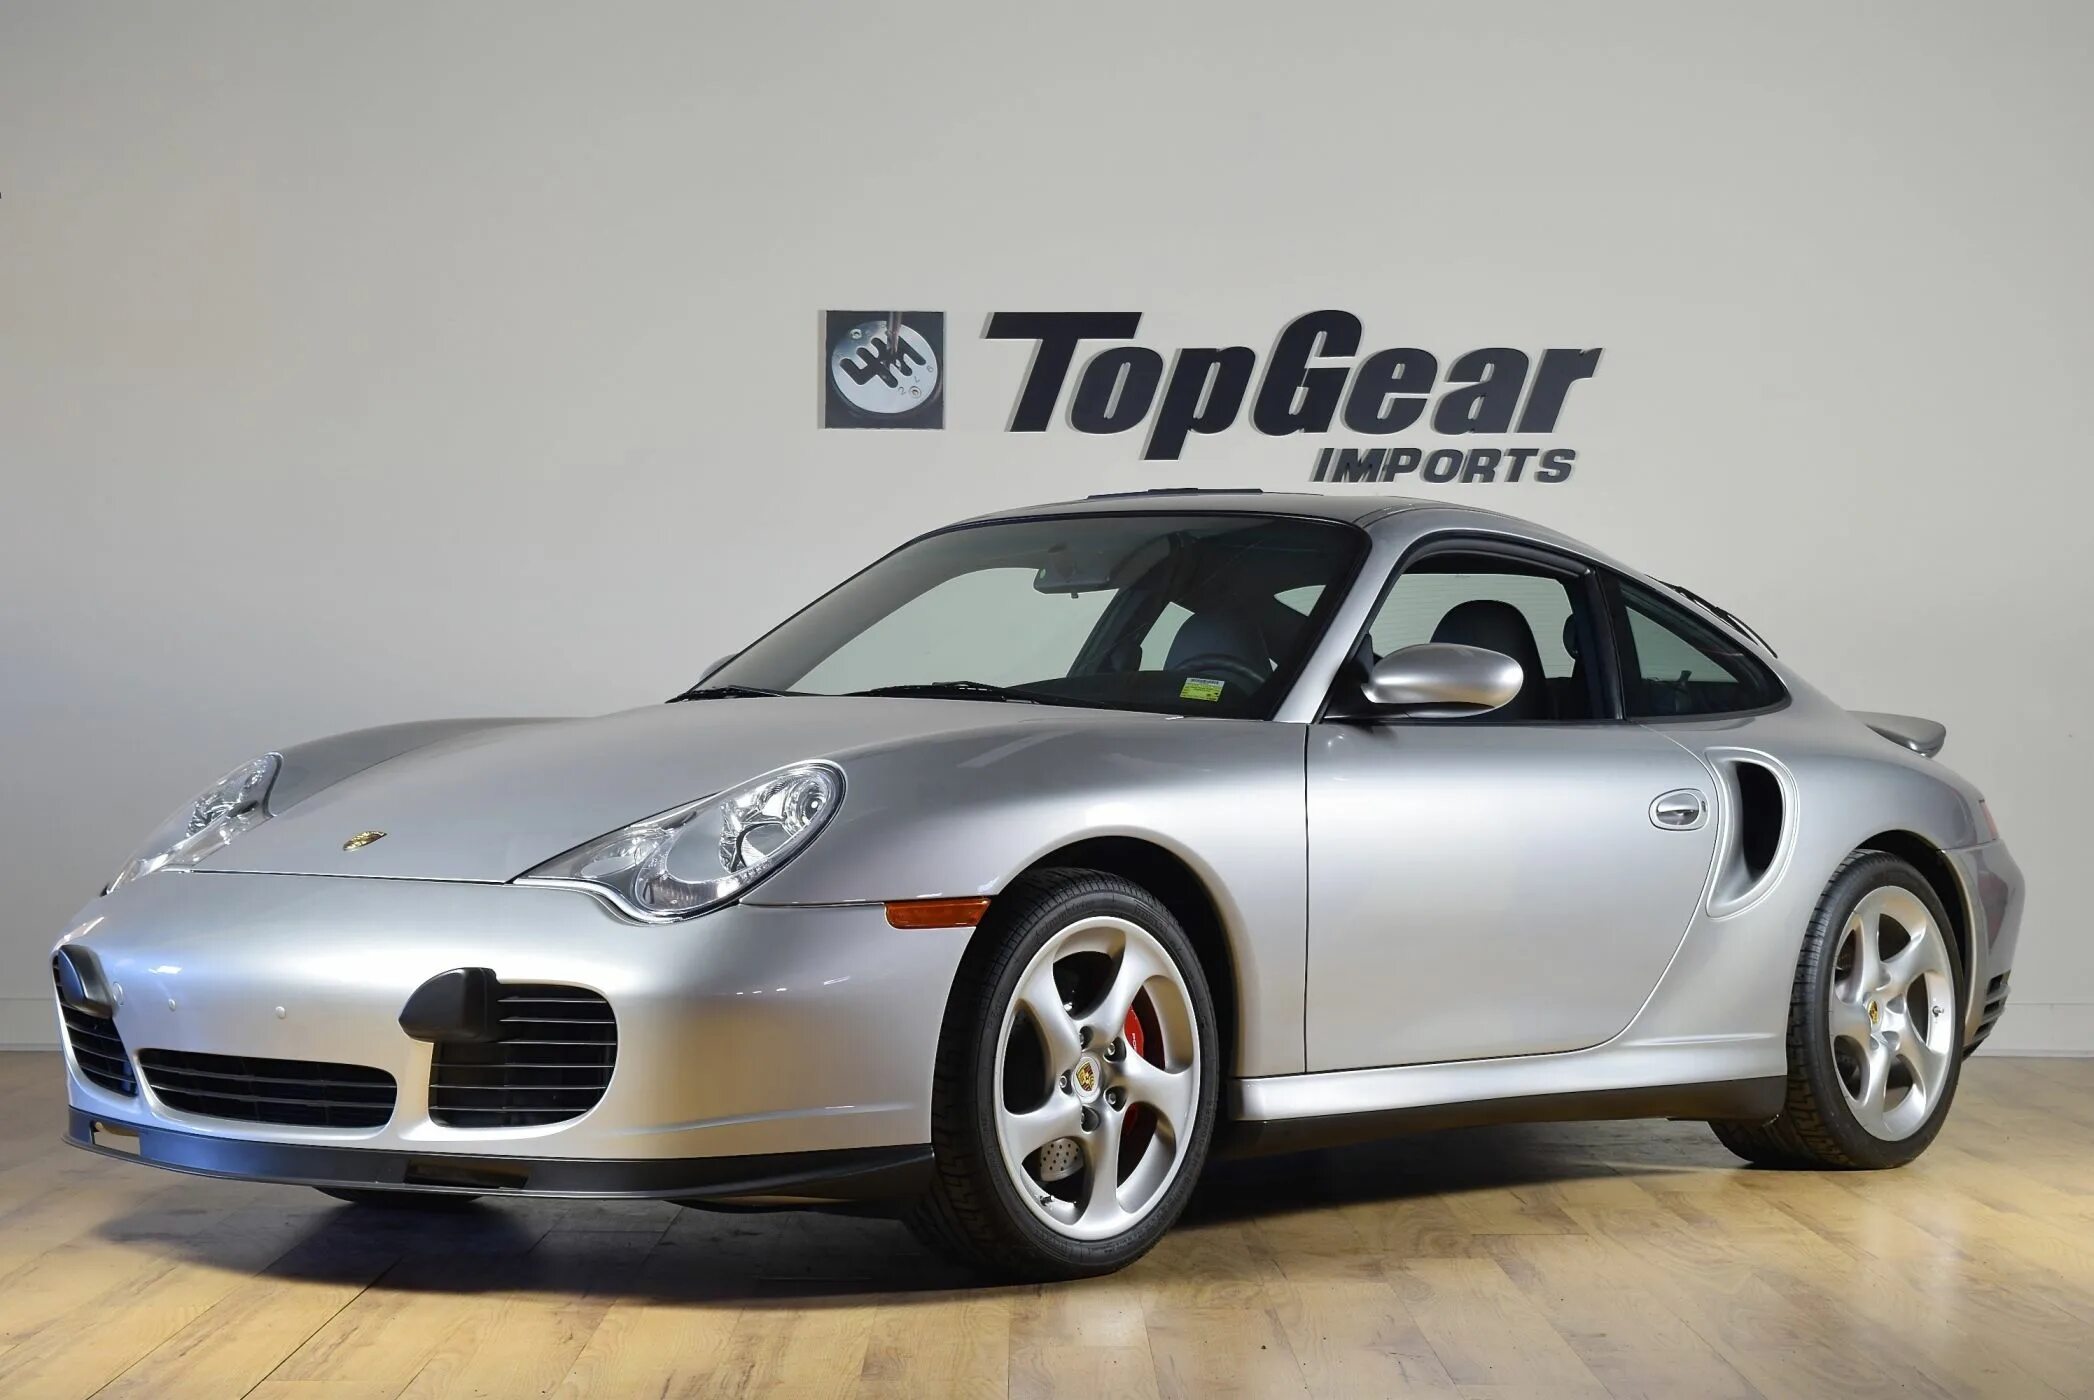 Порше страна. Porsche Turbo s 2000. 911 2001 Turbo s Blue. Изготовитель Porsche. Порше производитель.